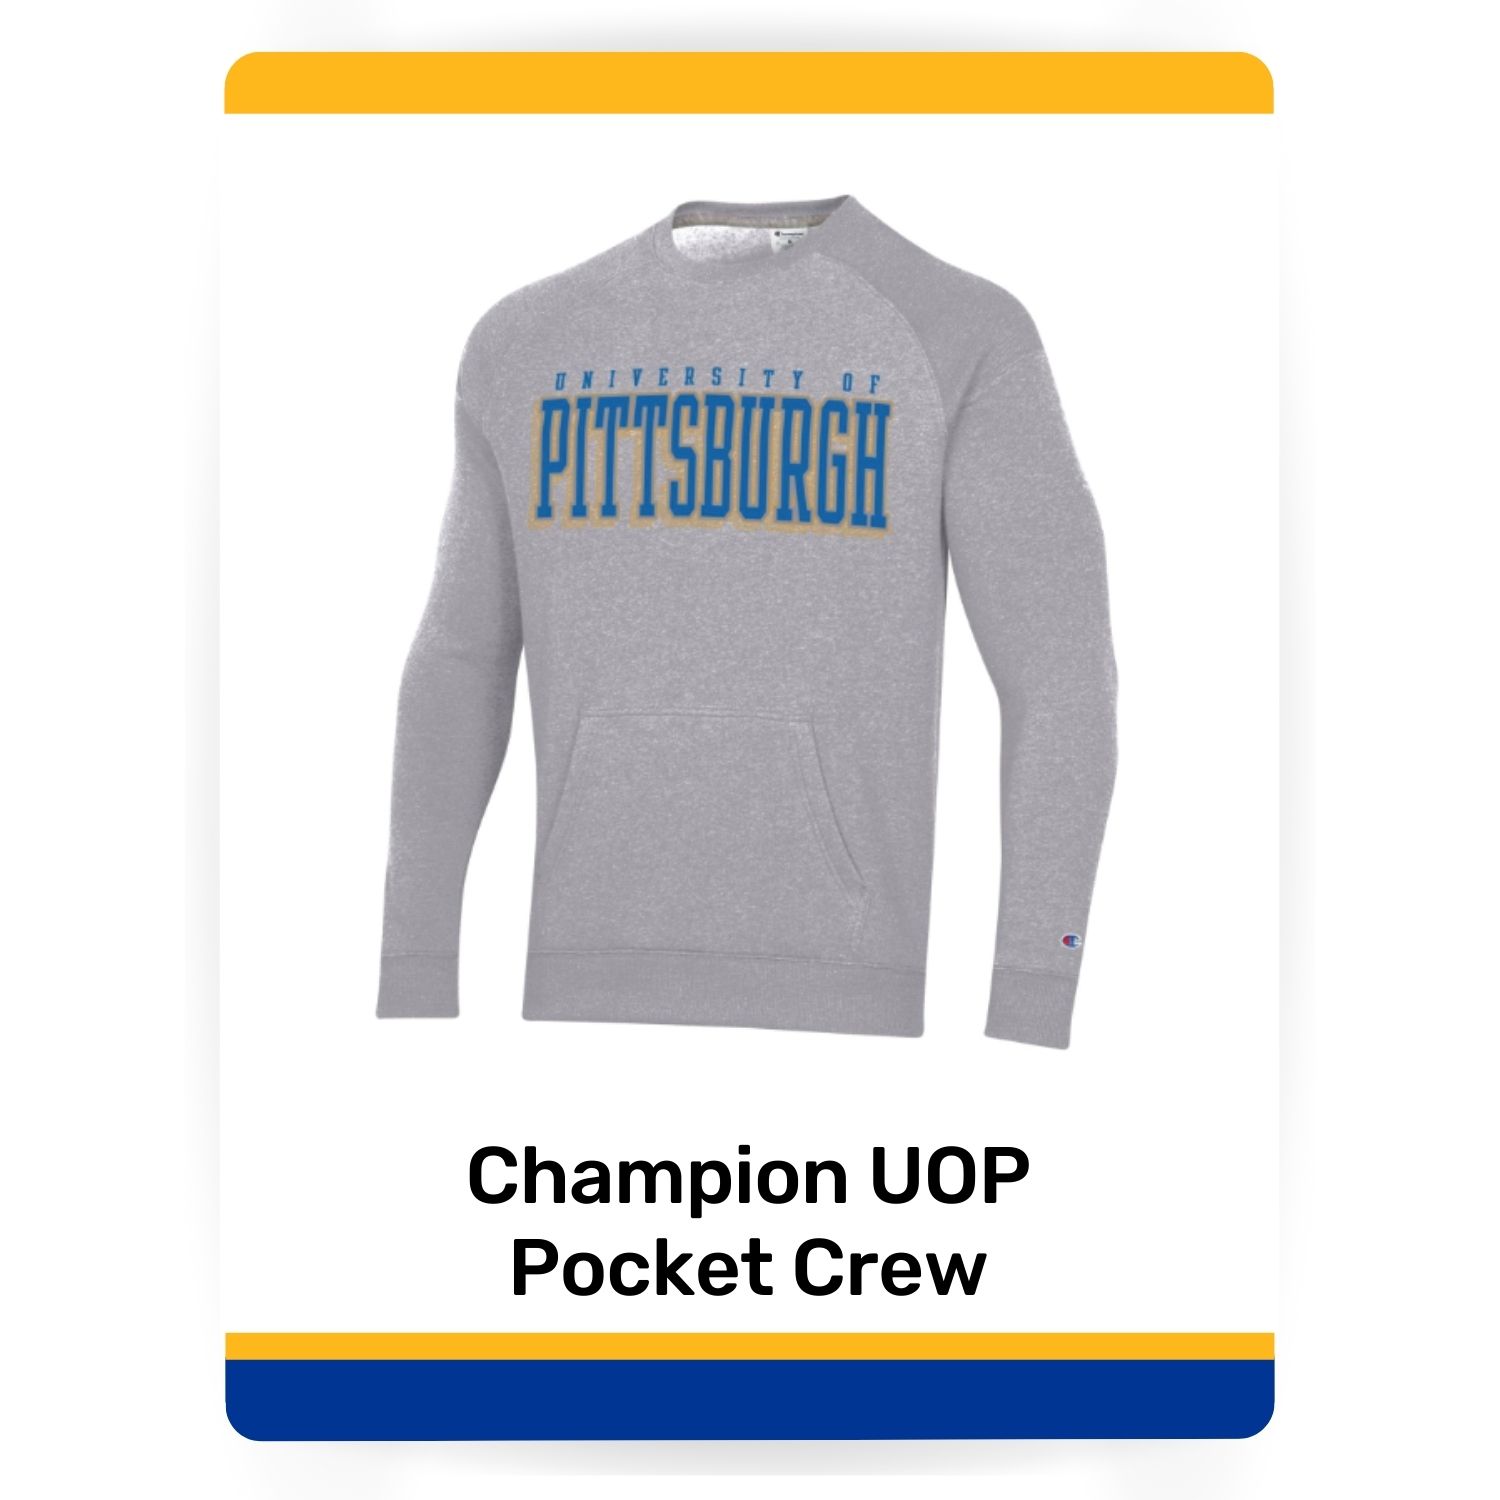 Champion UOP Pocket Crew